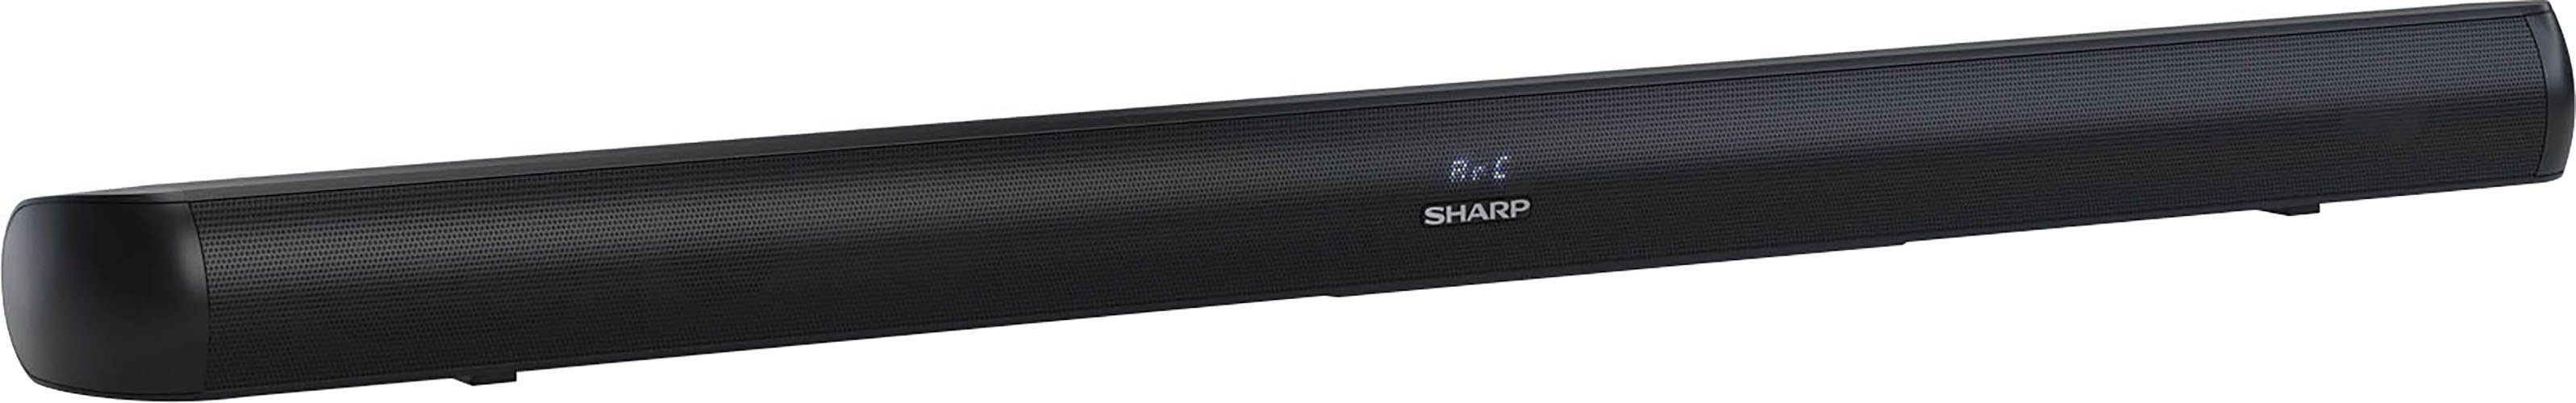 HT-SB147 Soundbar Stereo Sharp (Bluetooth)